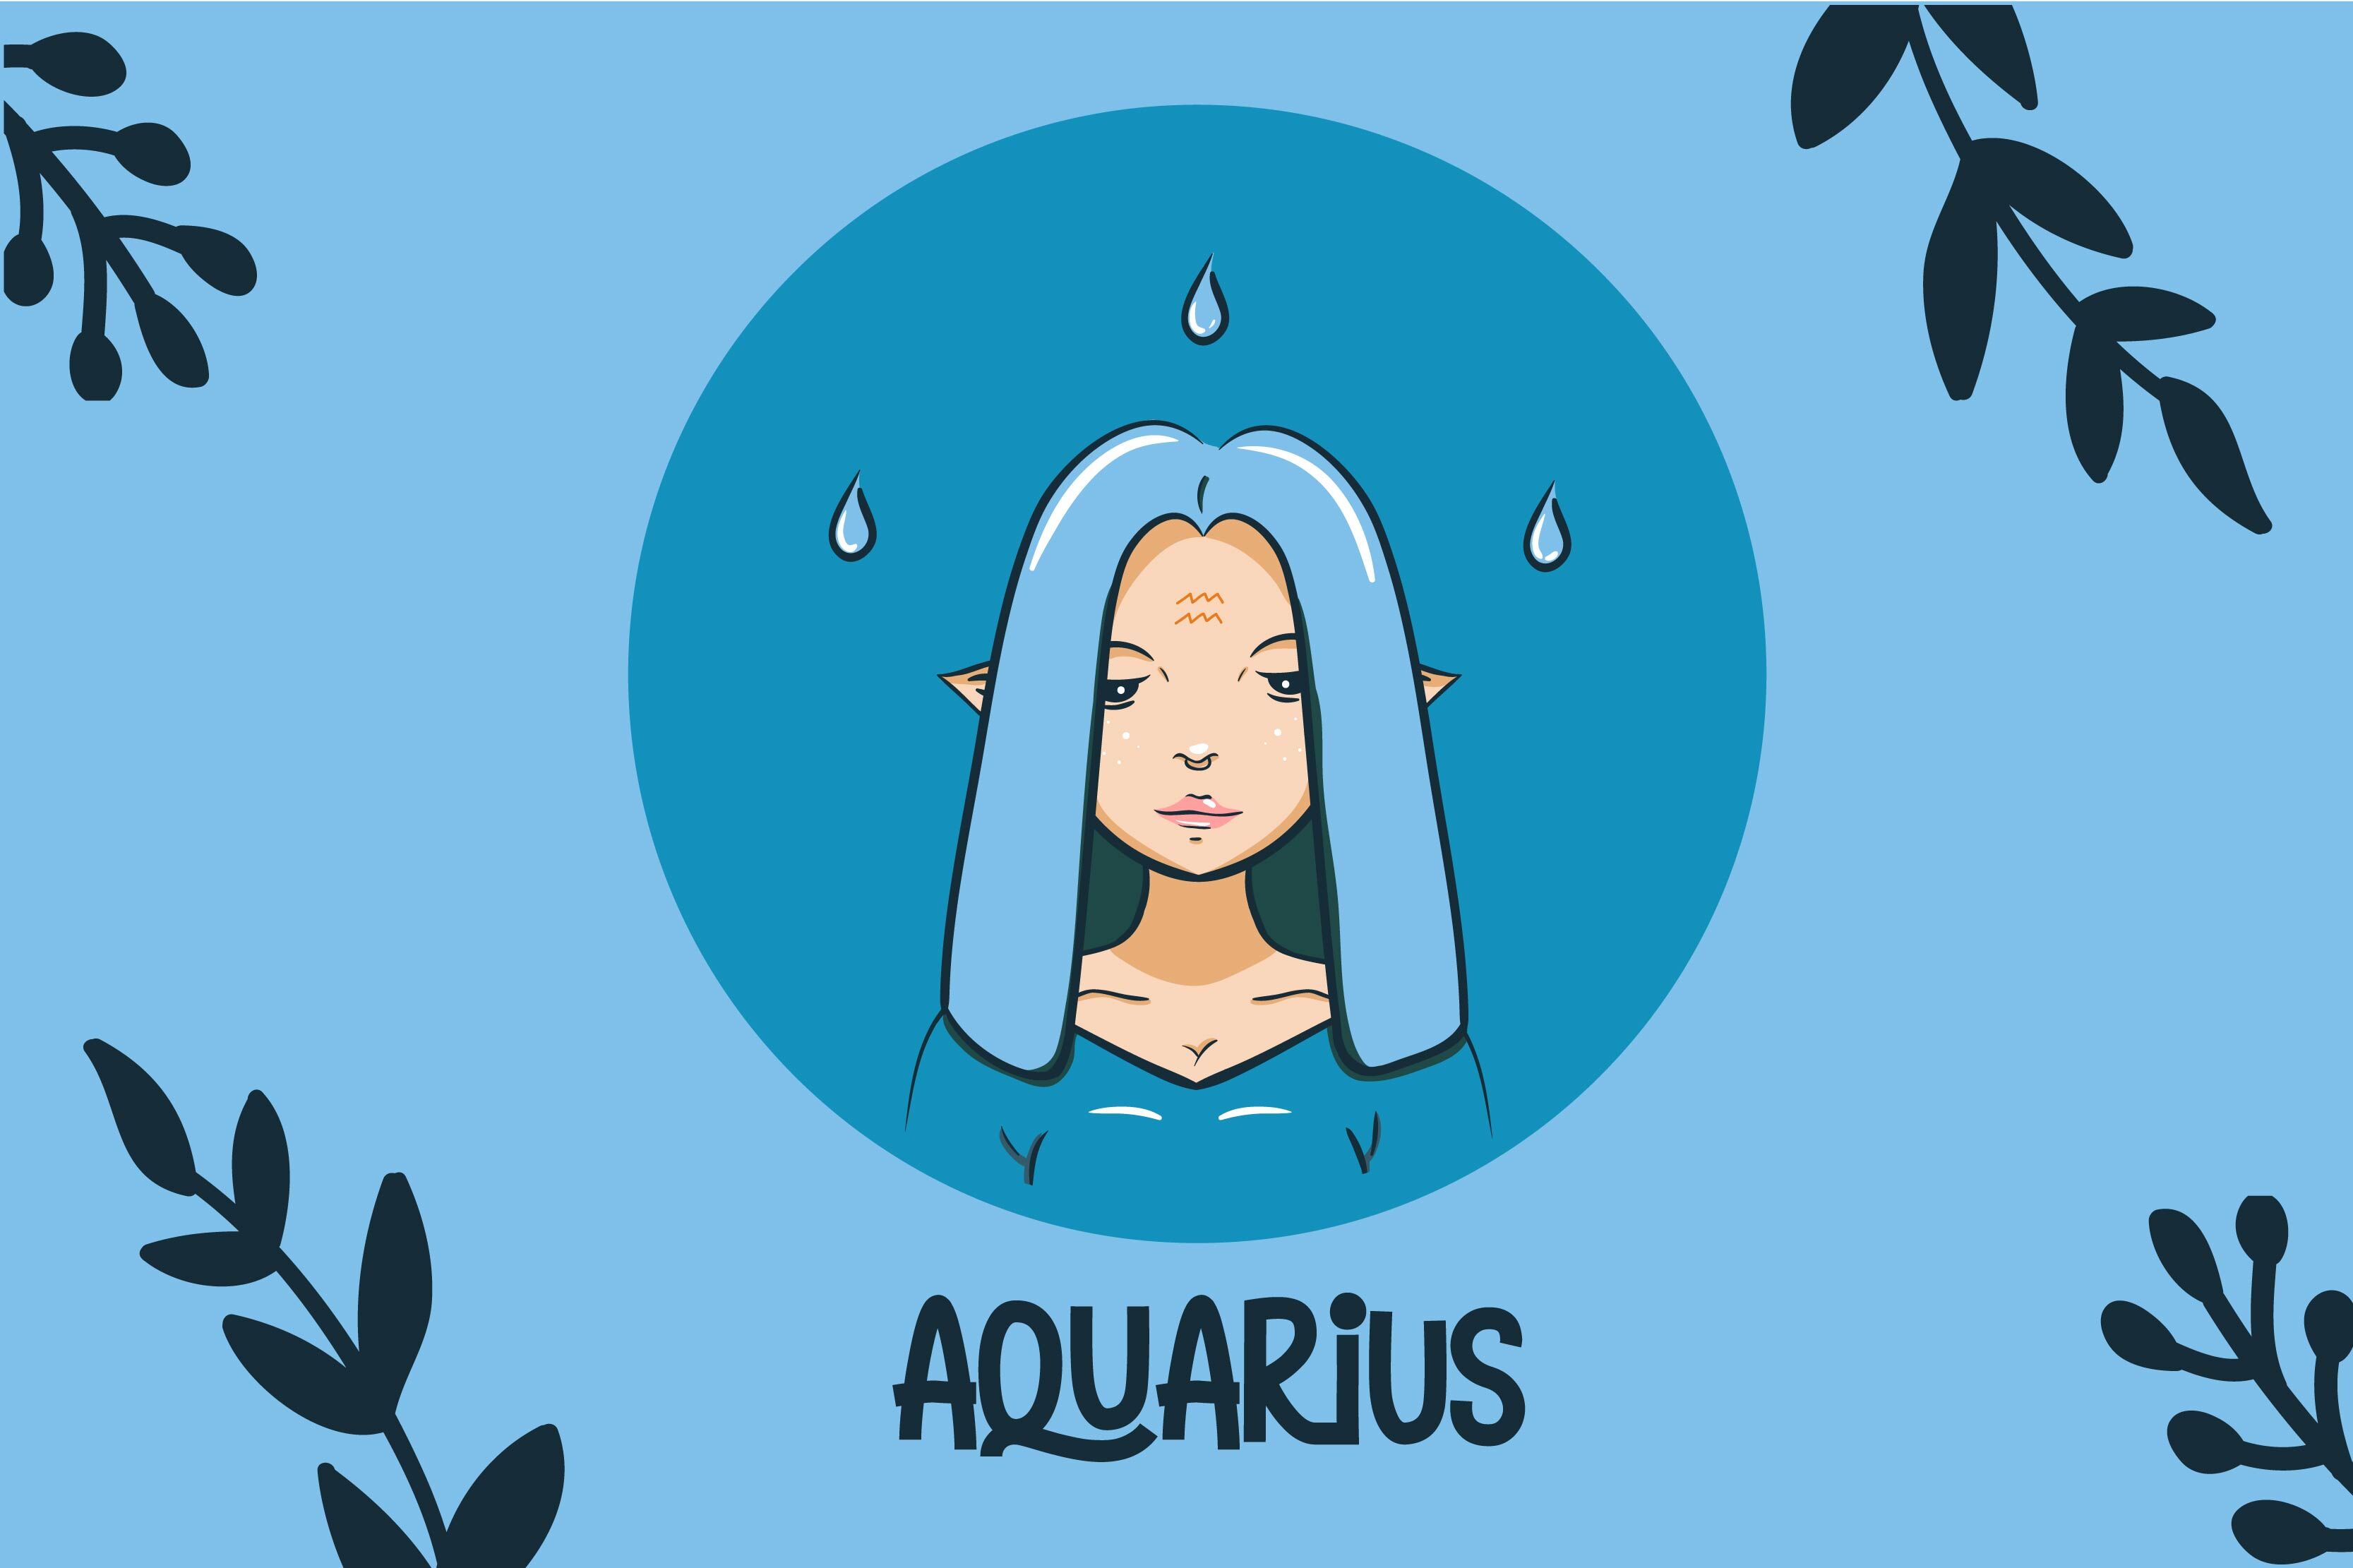 3 Pack of Aquarius, Aries, Cancer Character Illustration By belangbiru ...